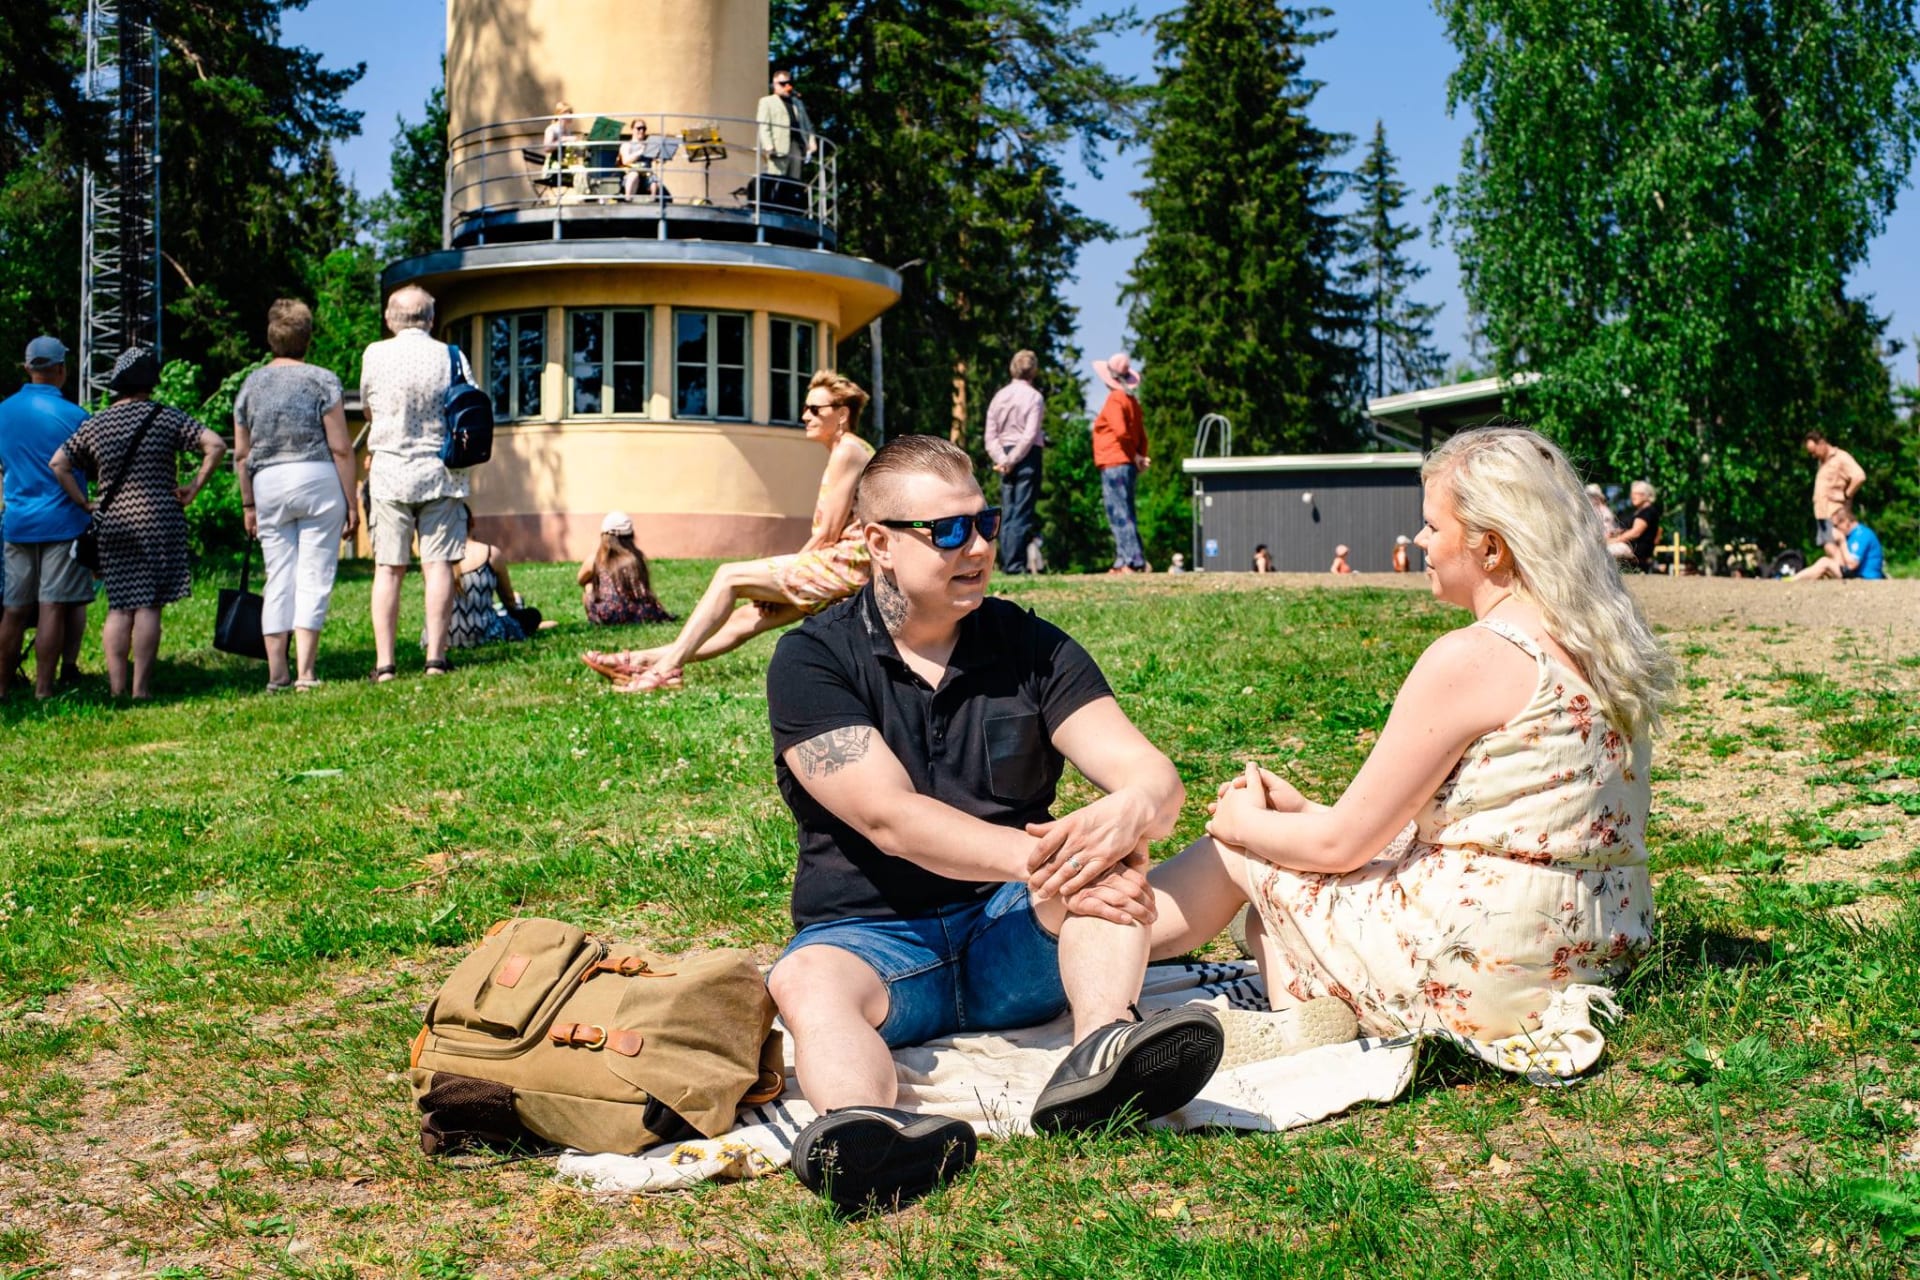 People having a picnic at Kirkkoharju Observation Tower